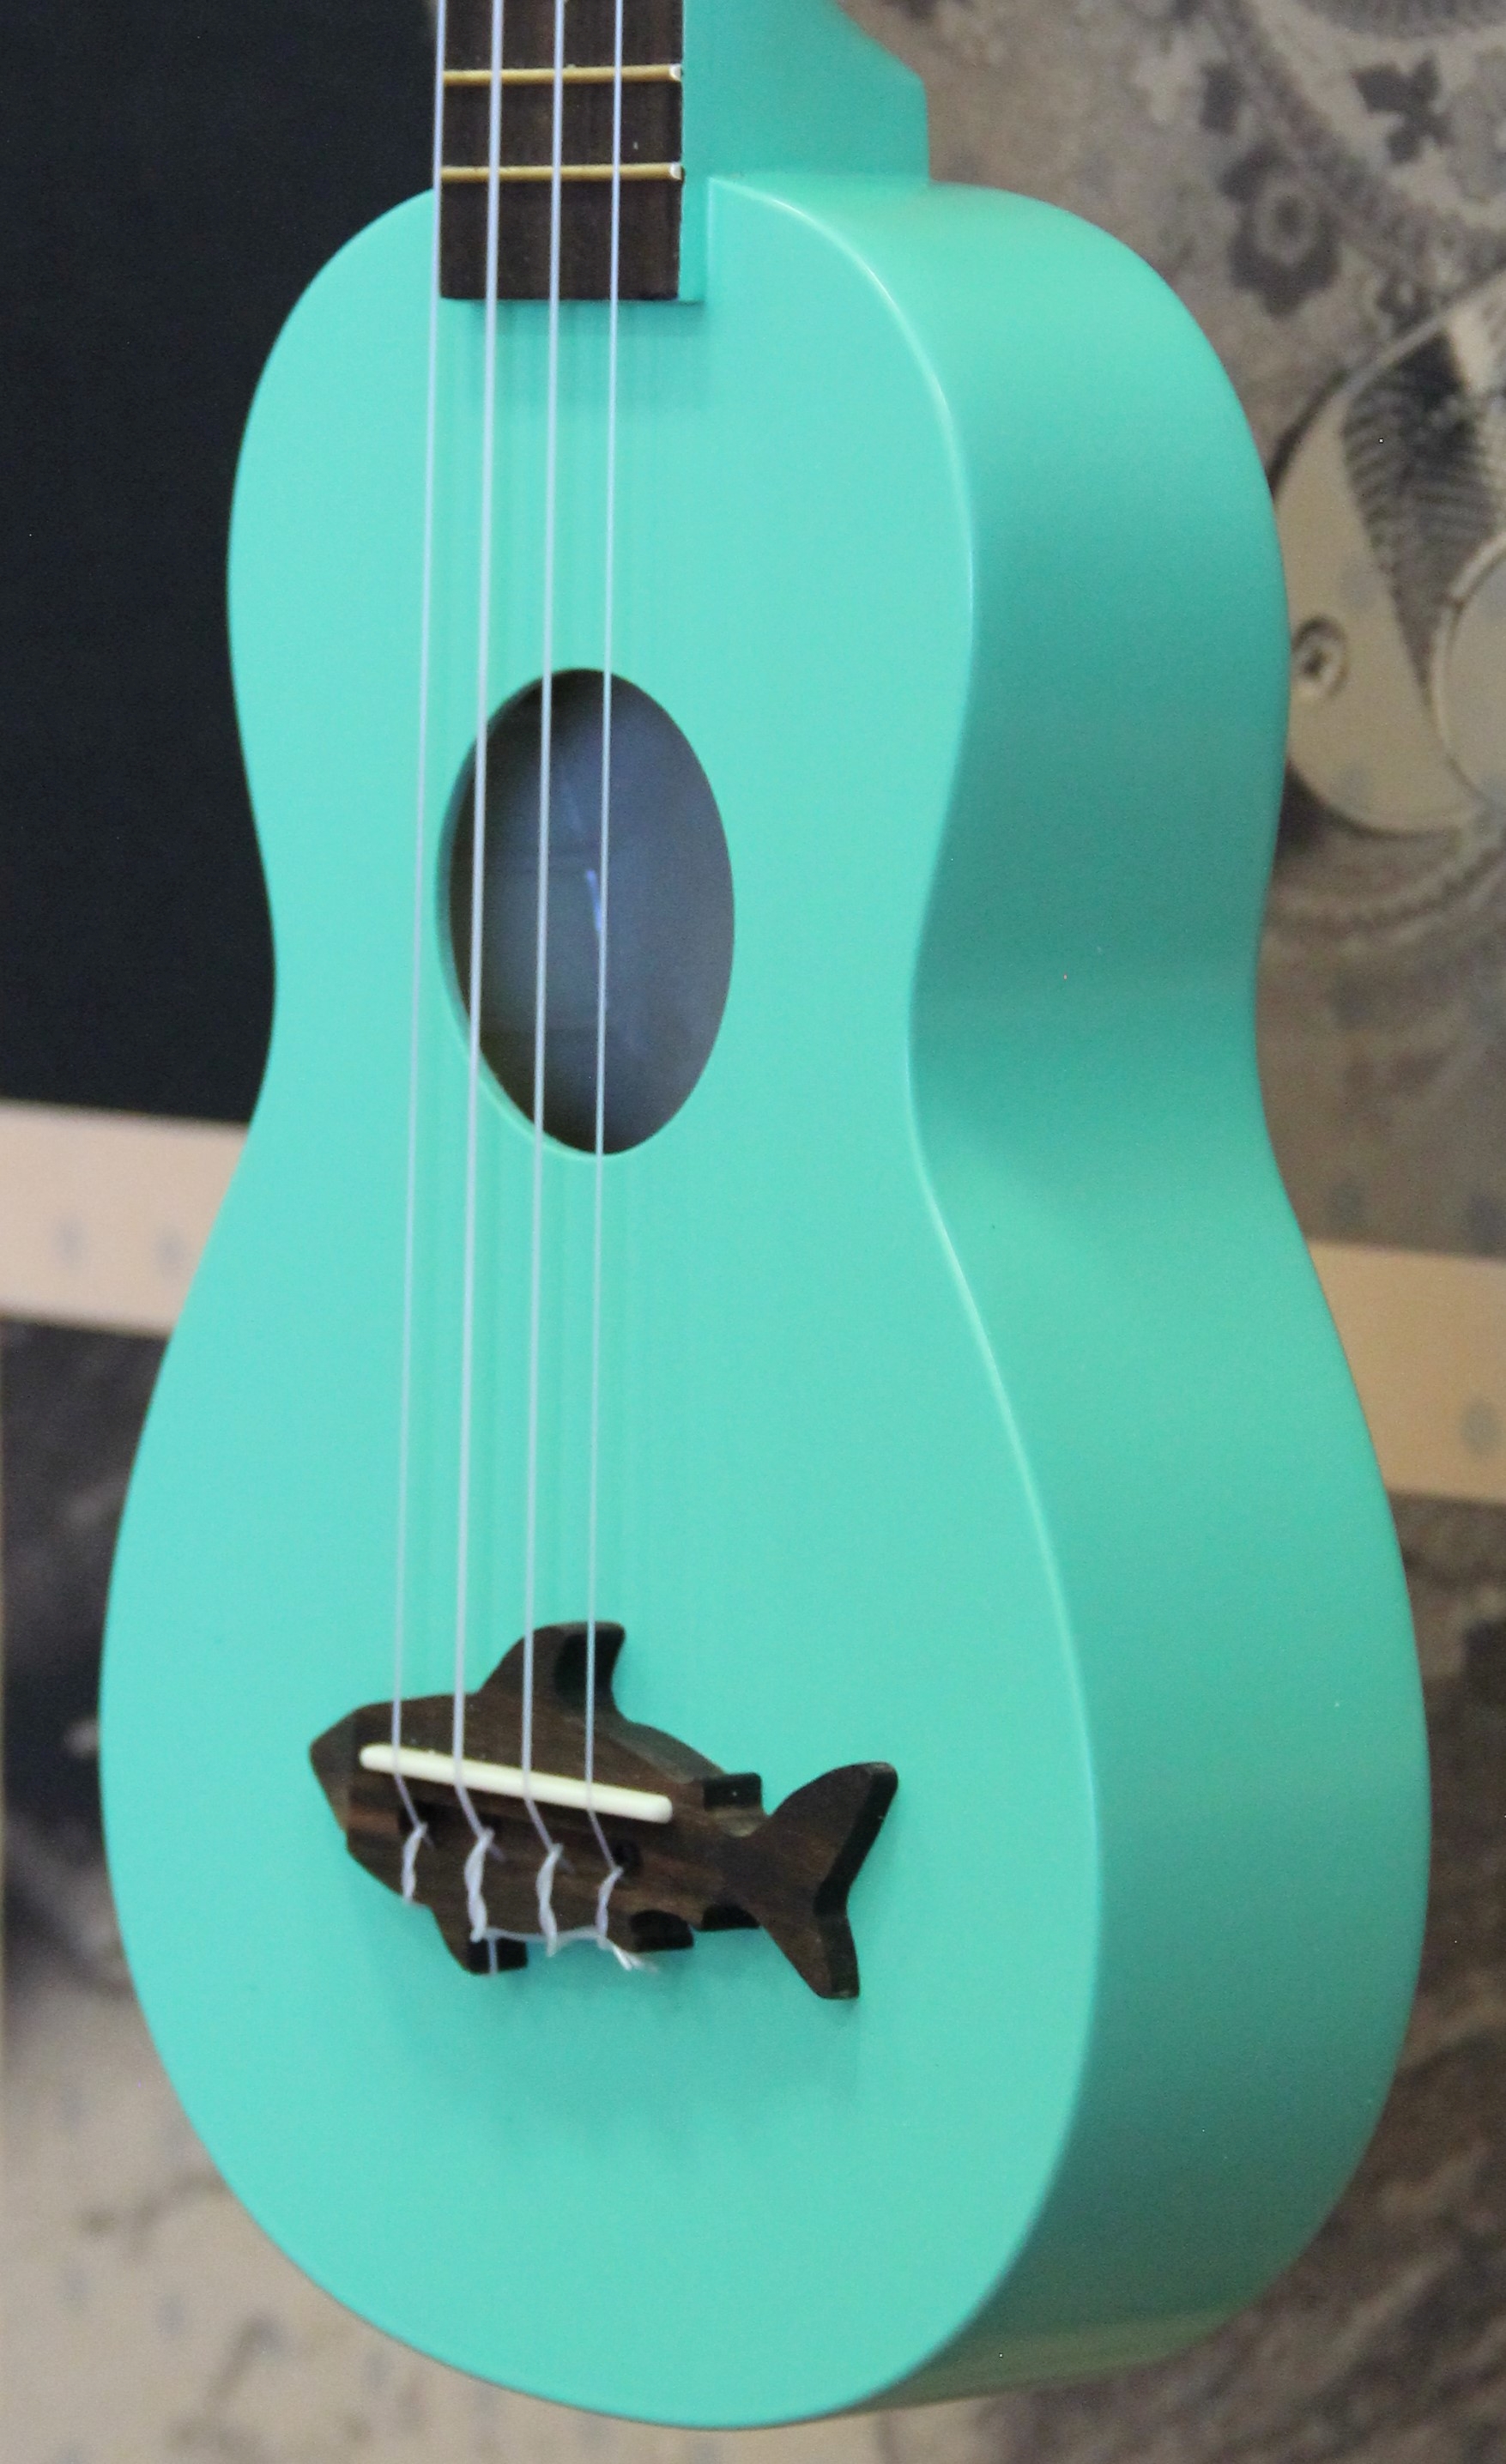 makala shark bridge soprano ukulele surf green